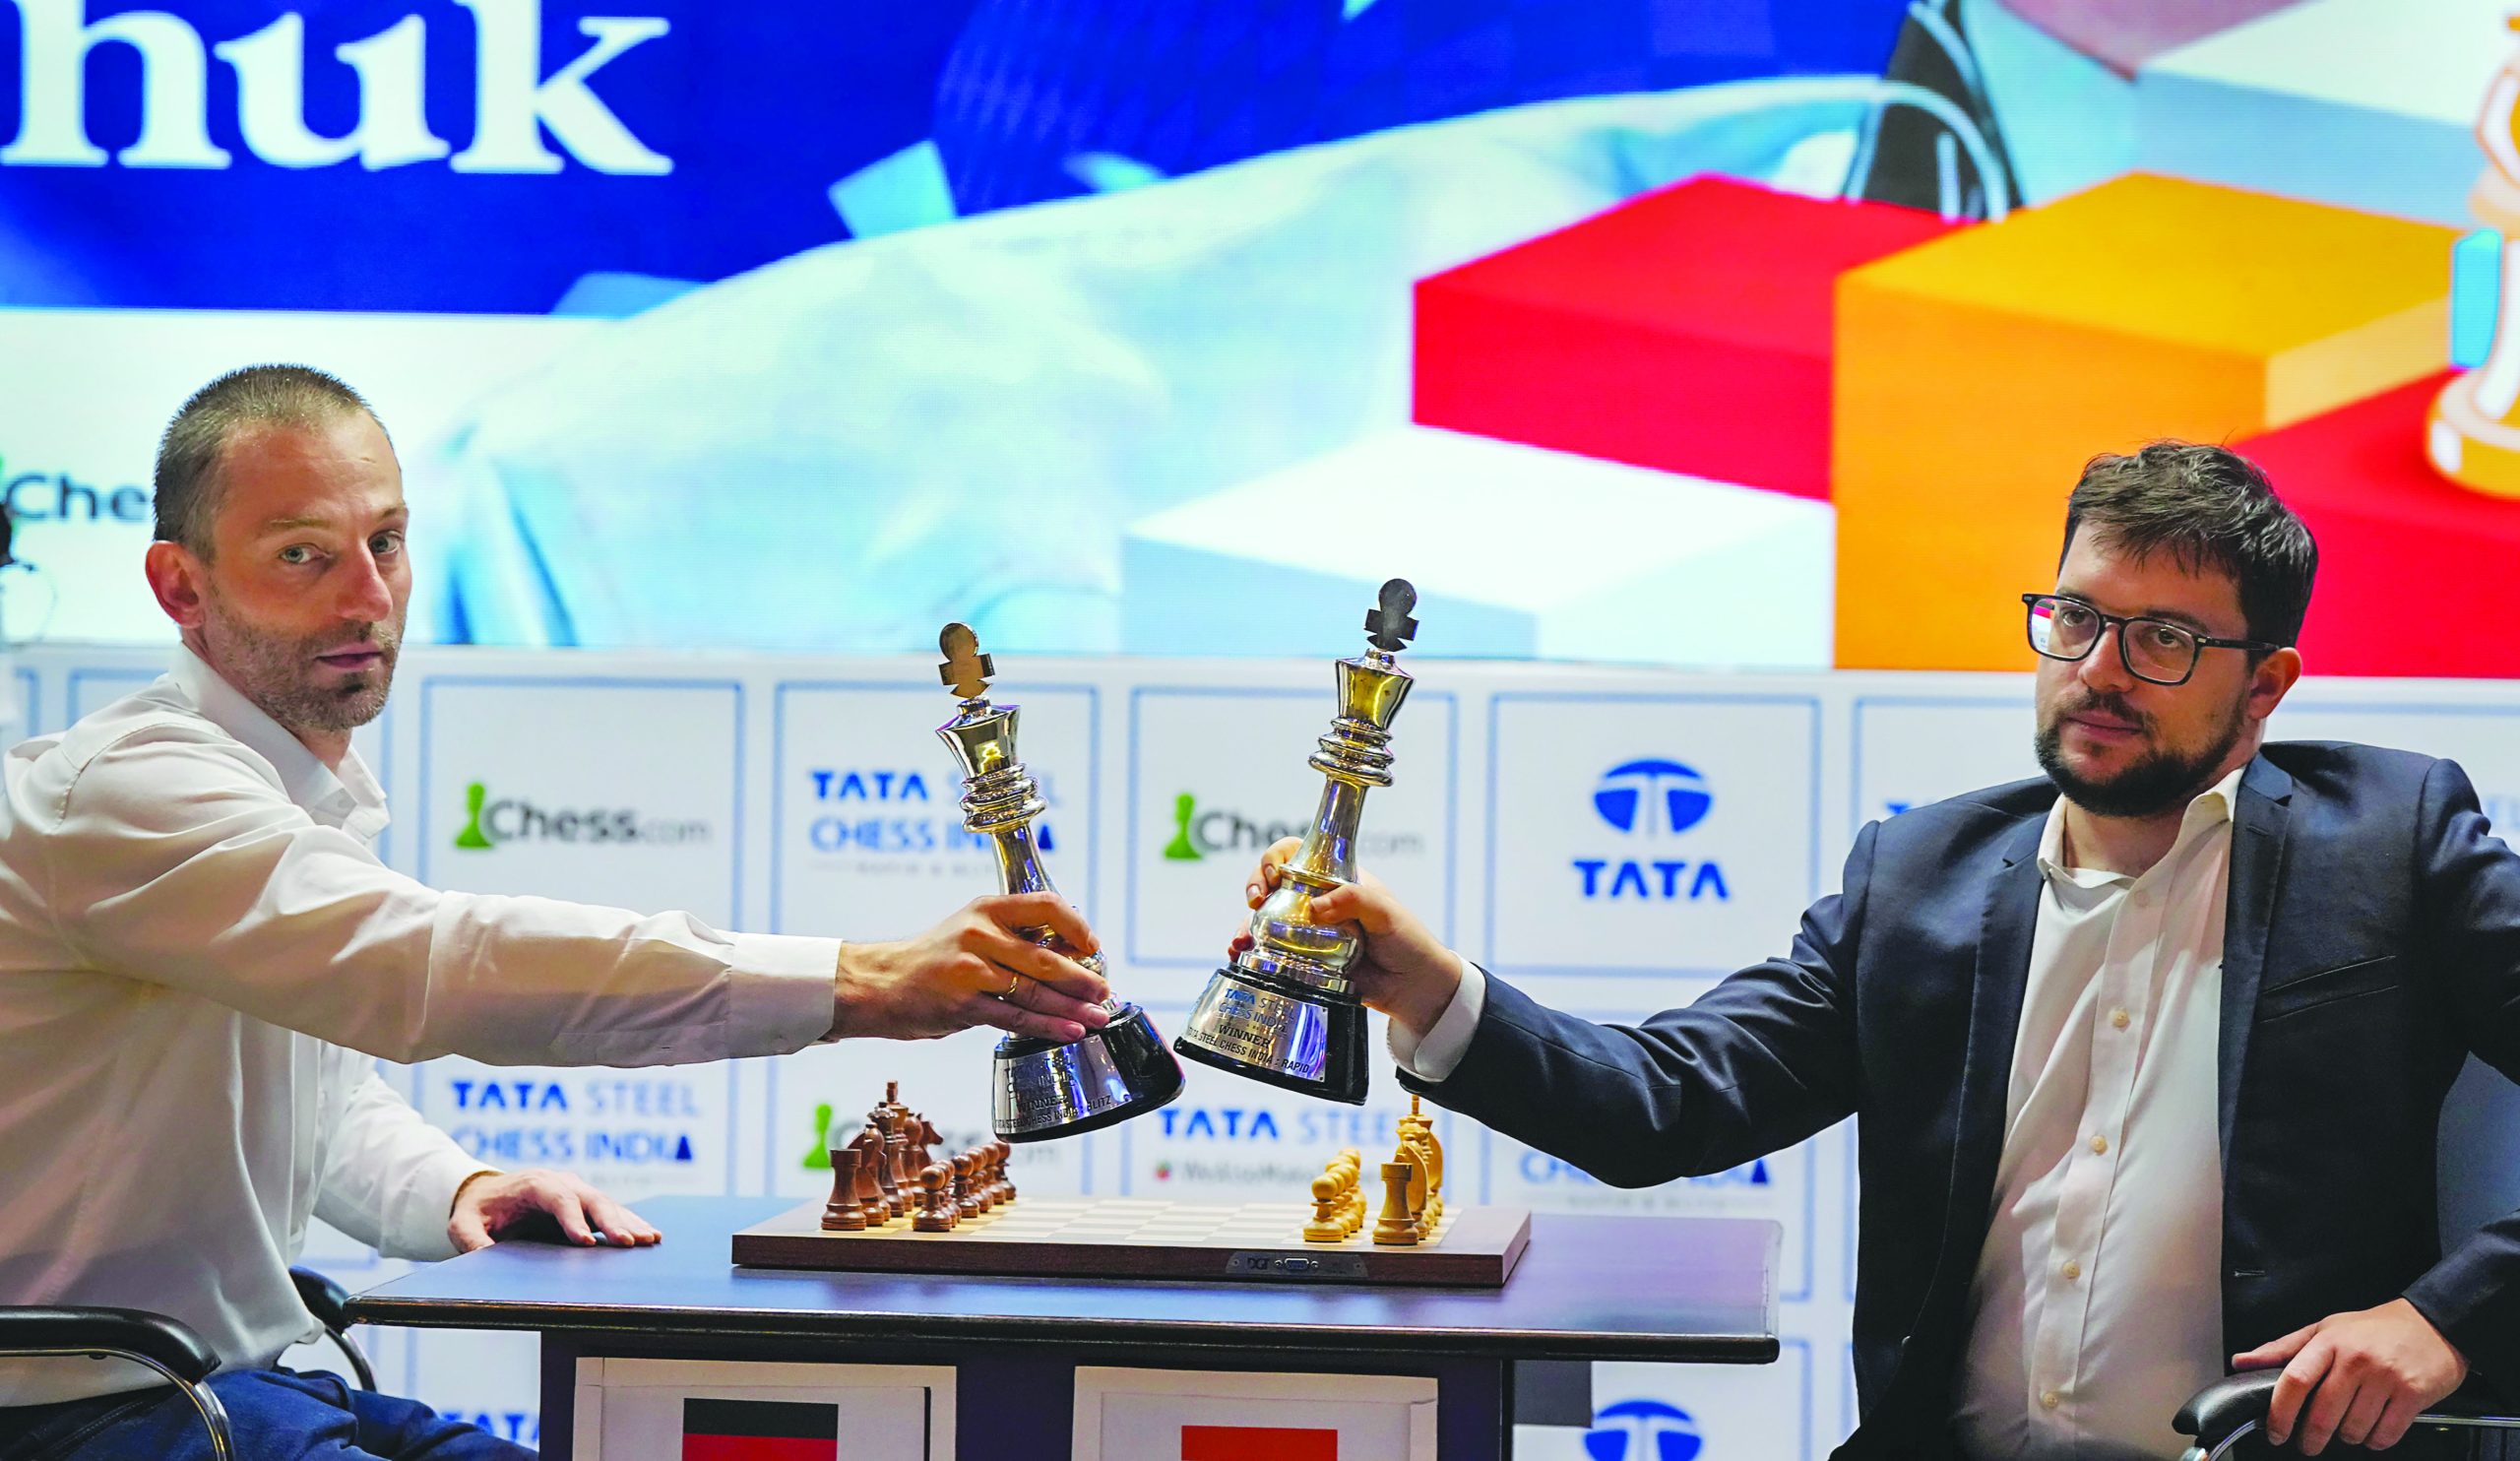 Tata Steel Chess INDIA, rapid & blitz 2023